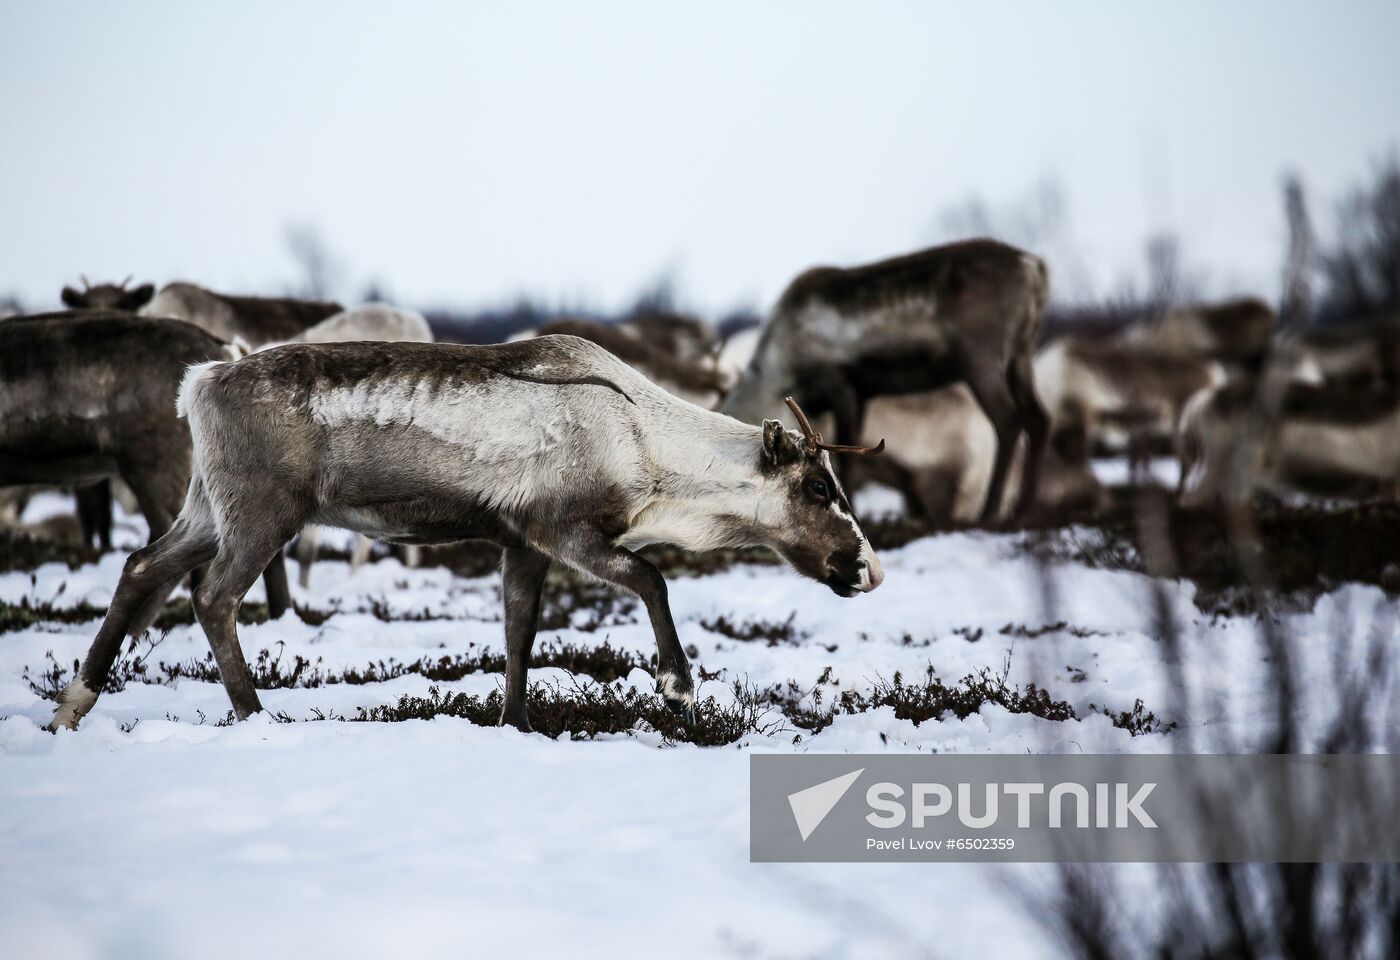 Russia Reindeers